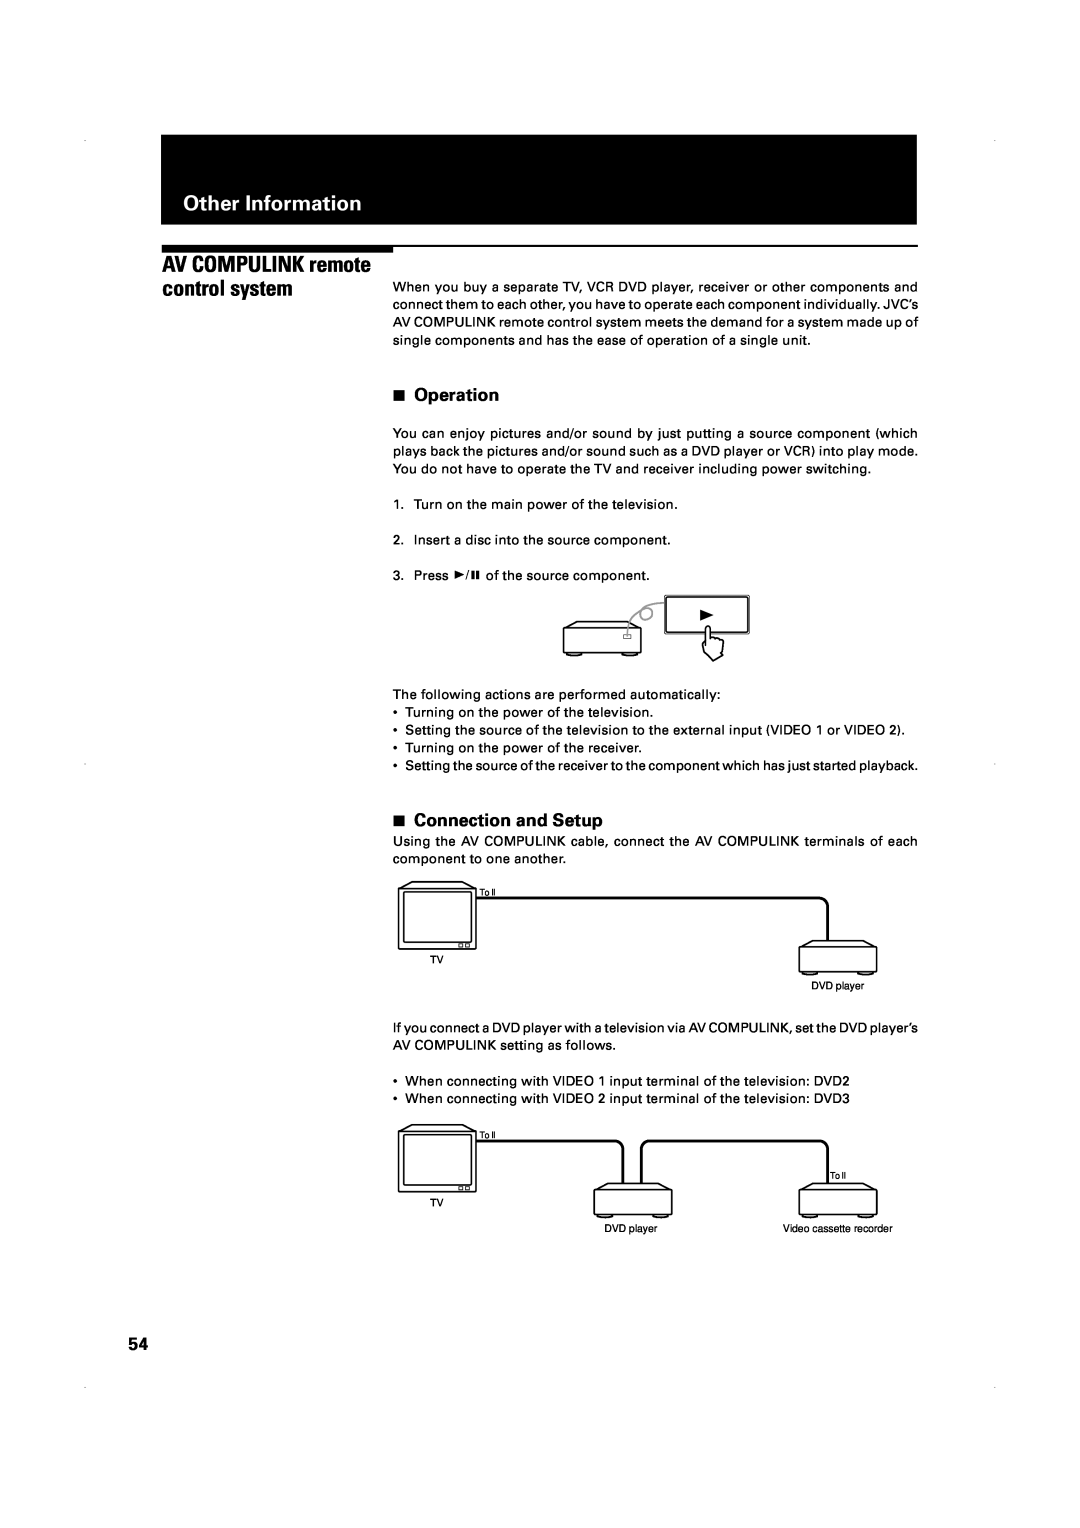 JVC XV-1000BK manual AV COMPULINK remote control system, Other Information, 7Operation, 7Connection and Setup 